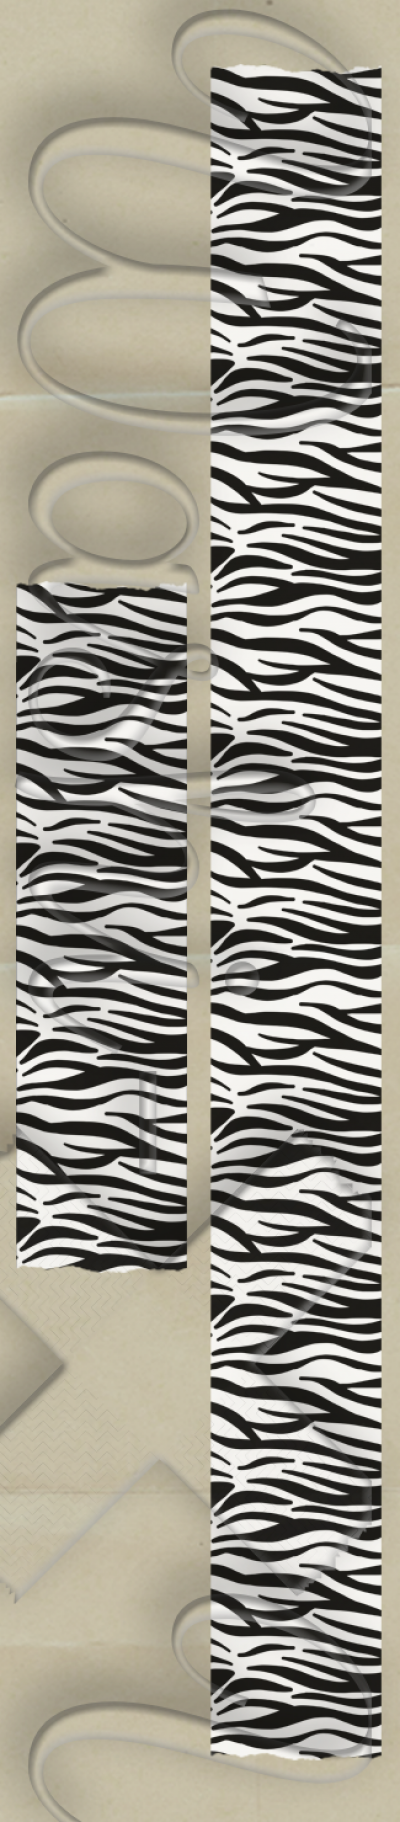 Zebra patterned washi tape